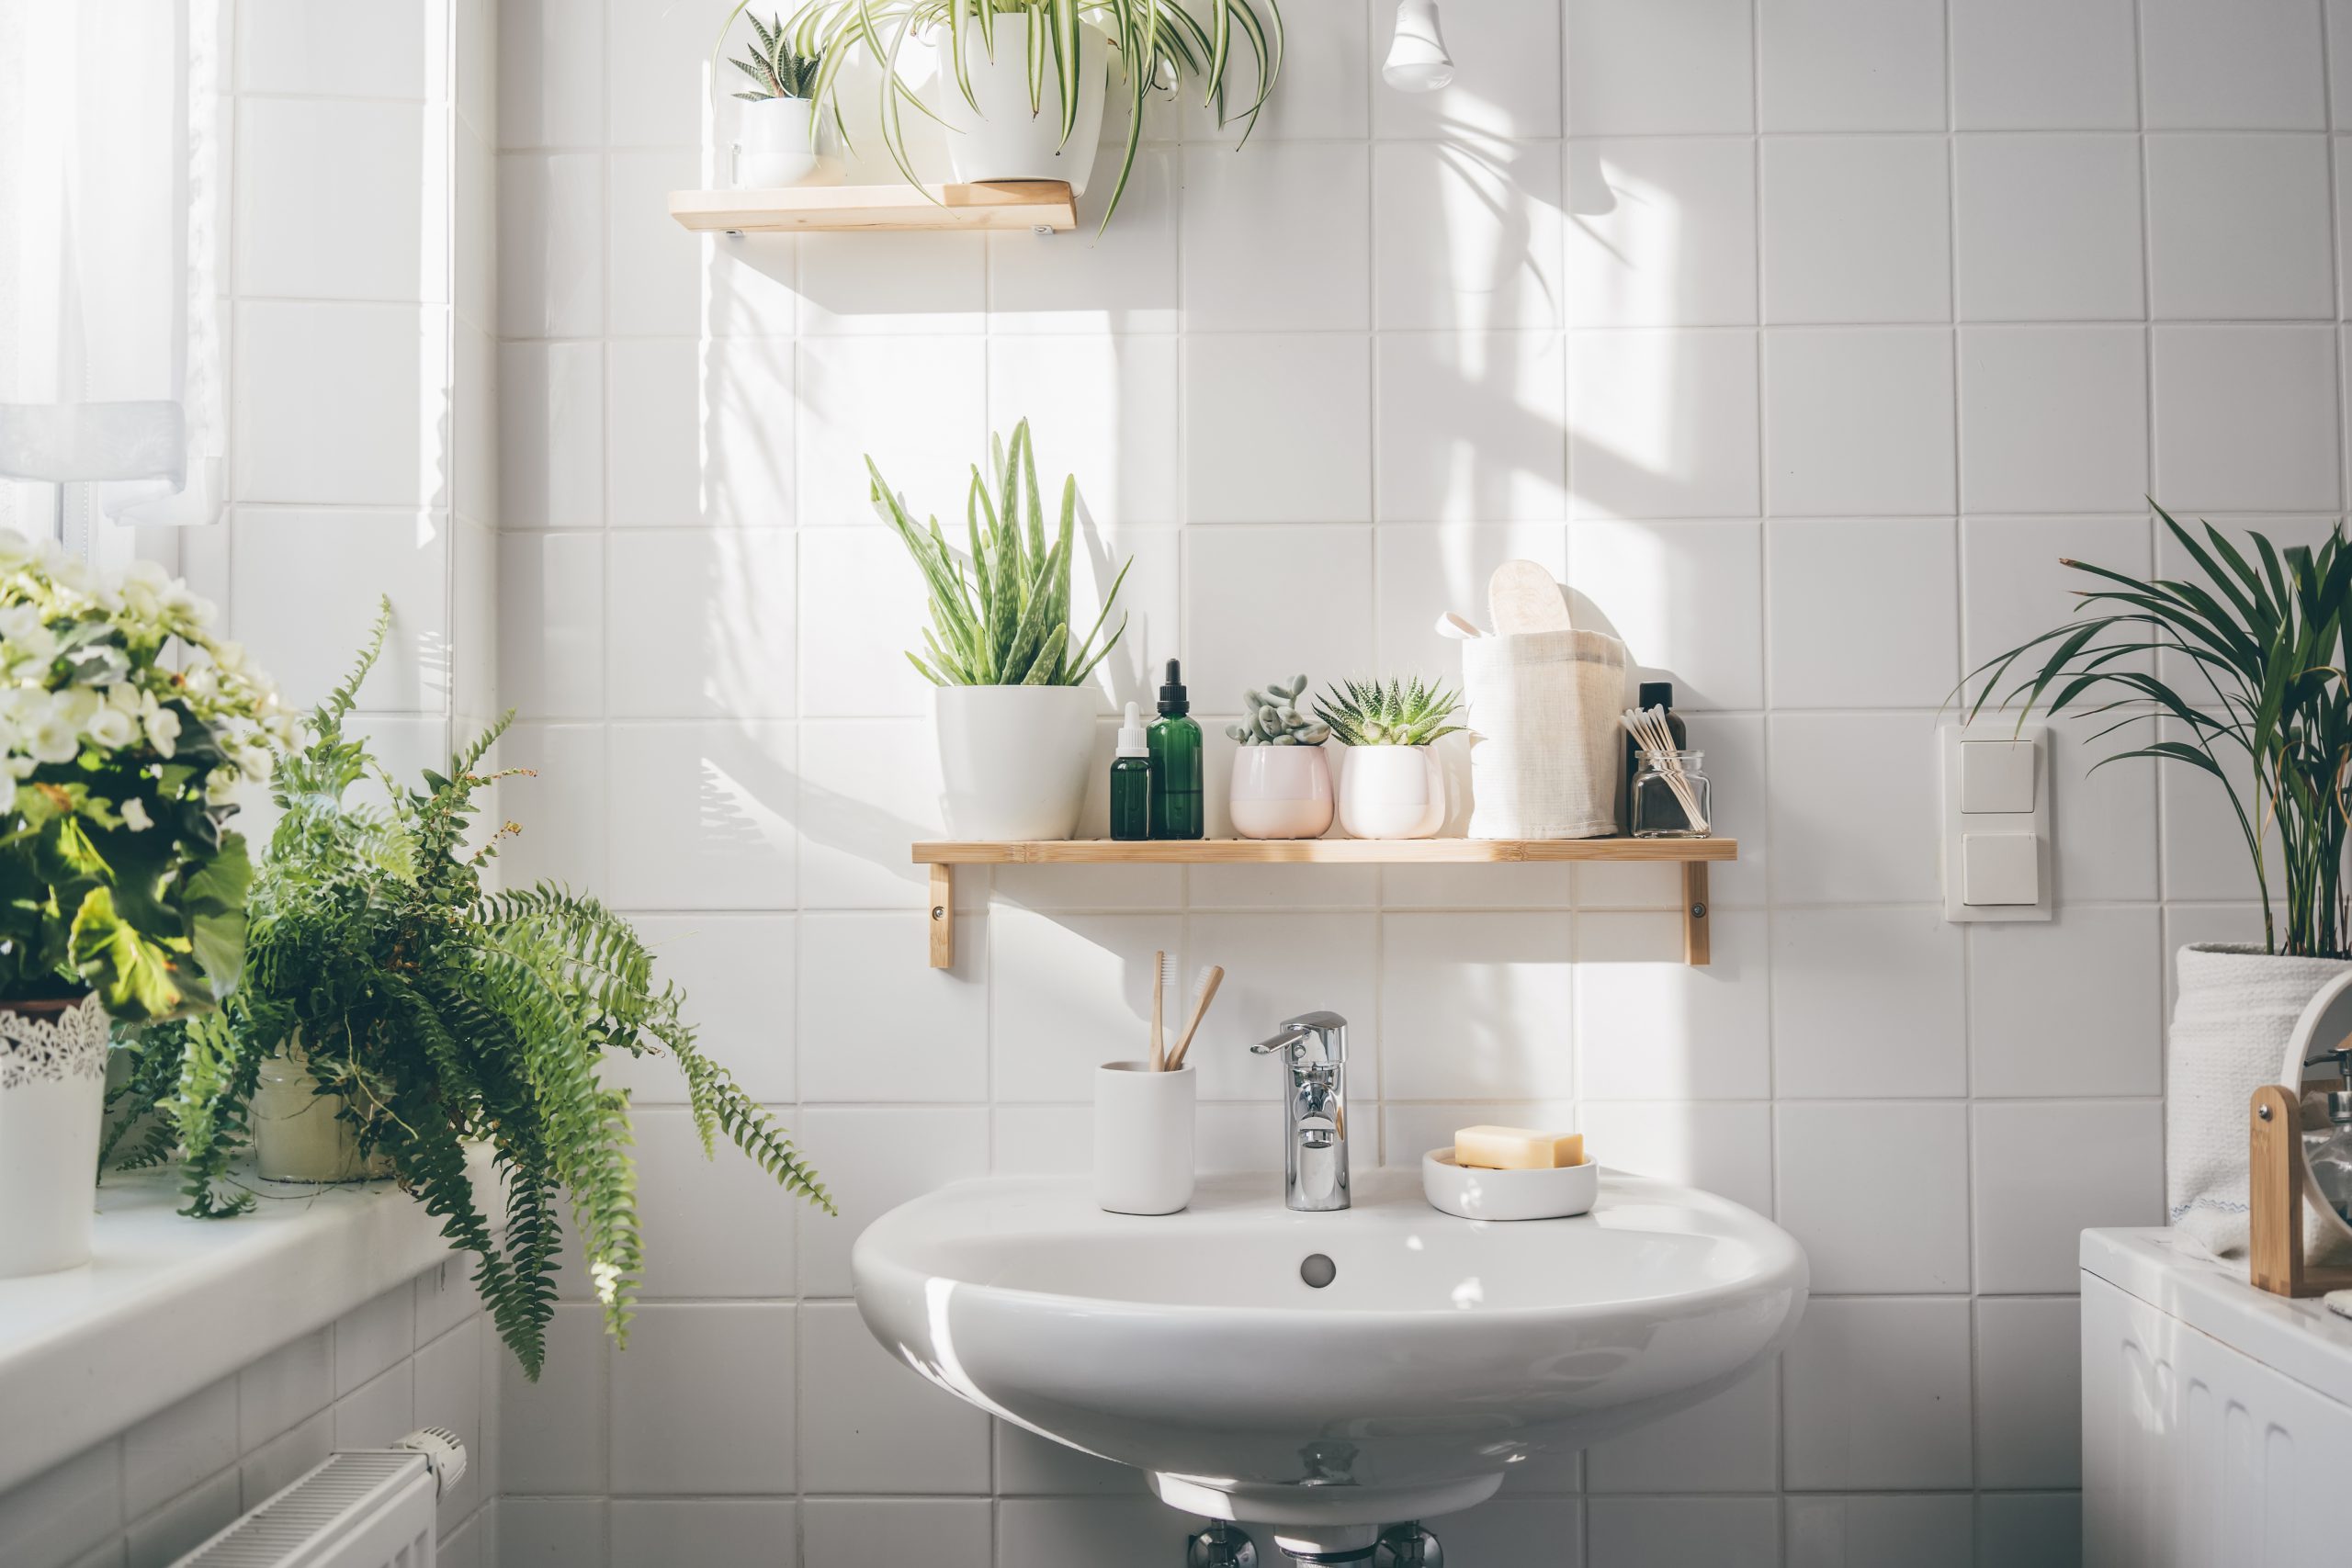 Modern White Bathroom With Many Green Plants 2021 10 20 00 59 04 Utc